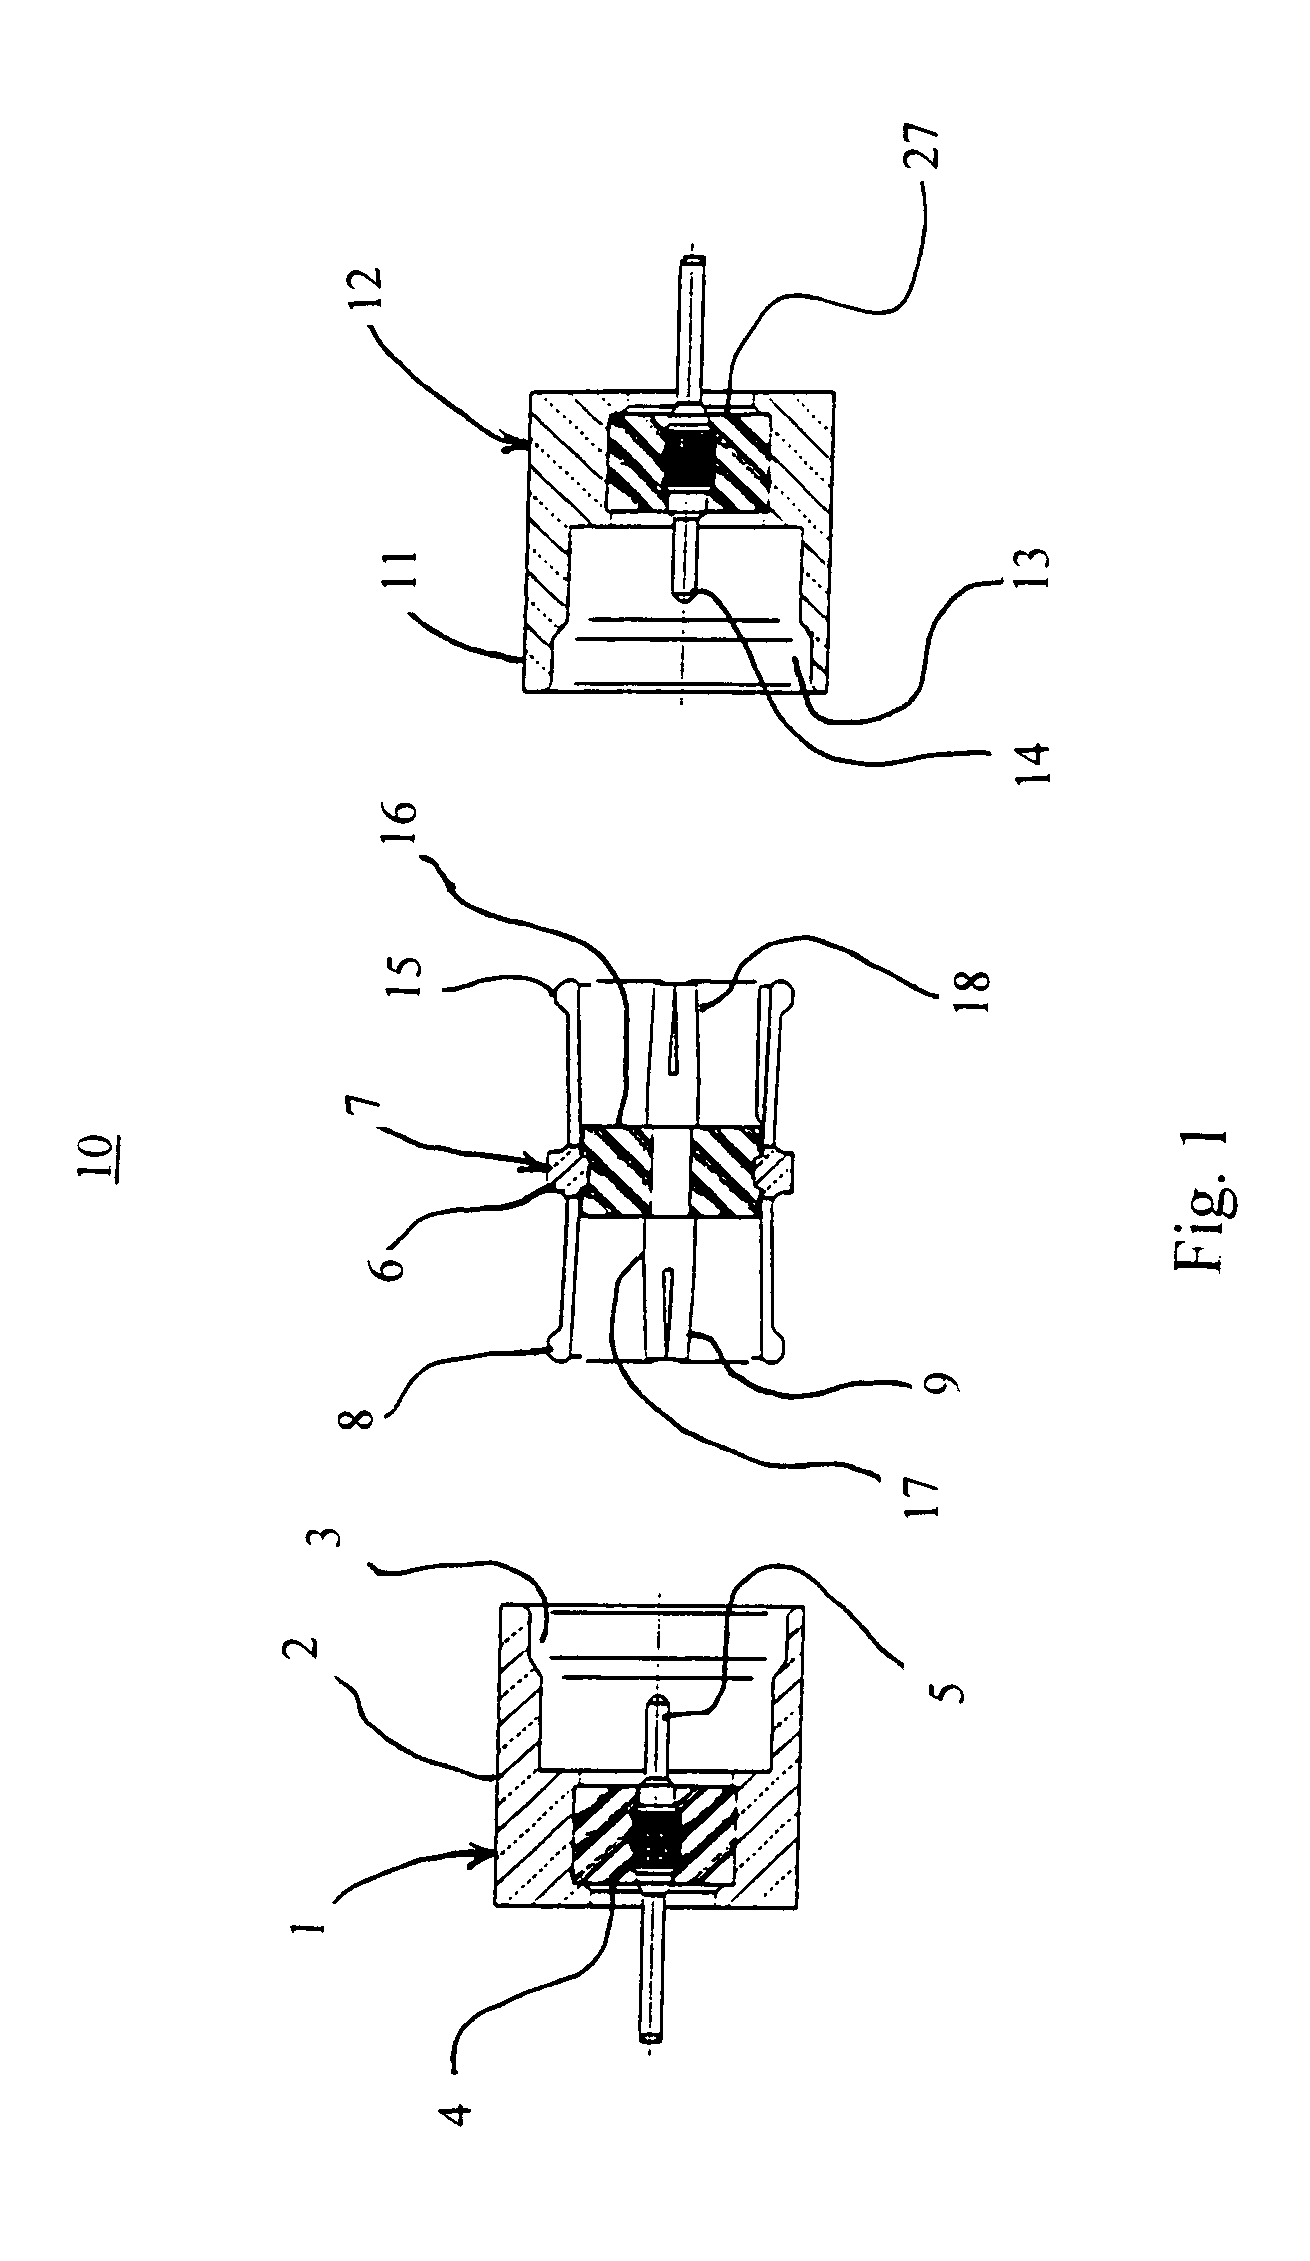 Modular RF connector system